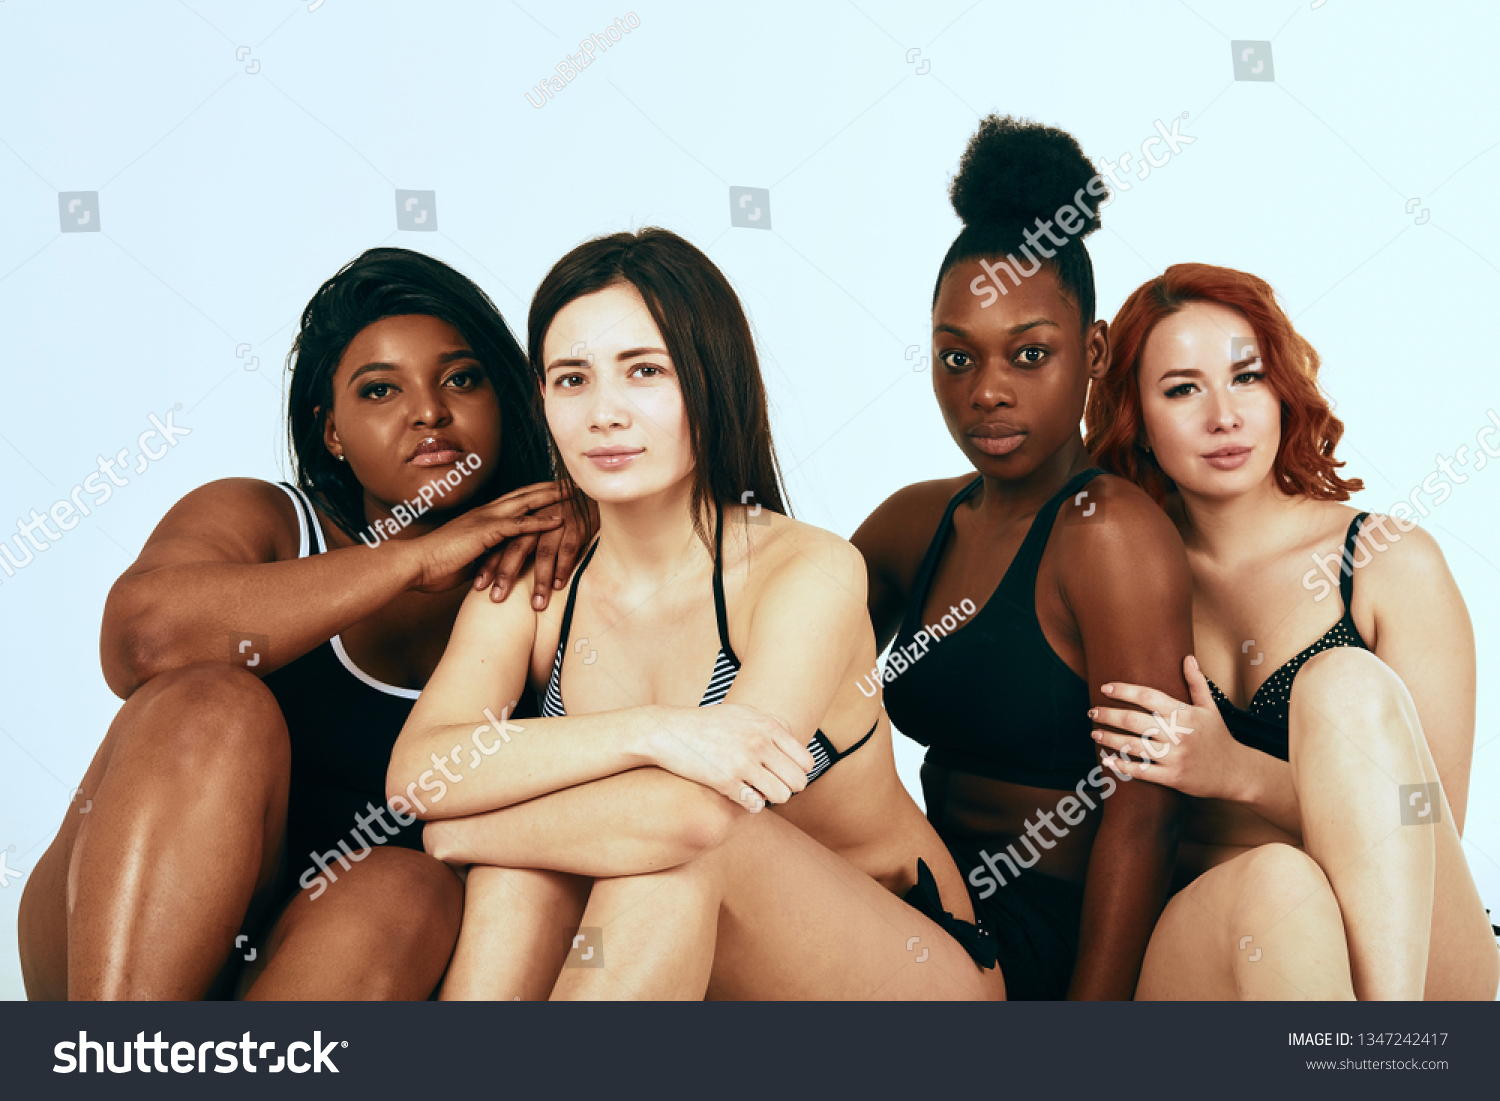 Multi-ethnic beauty. Different ethnicity women - Caucasian, African, Latin, Hispanic beautiful adult girlfriends posing in underwear isolated over white studio background. #1347242417